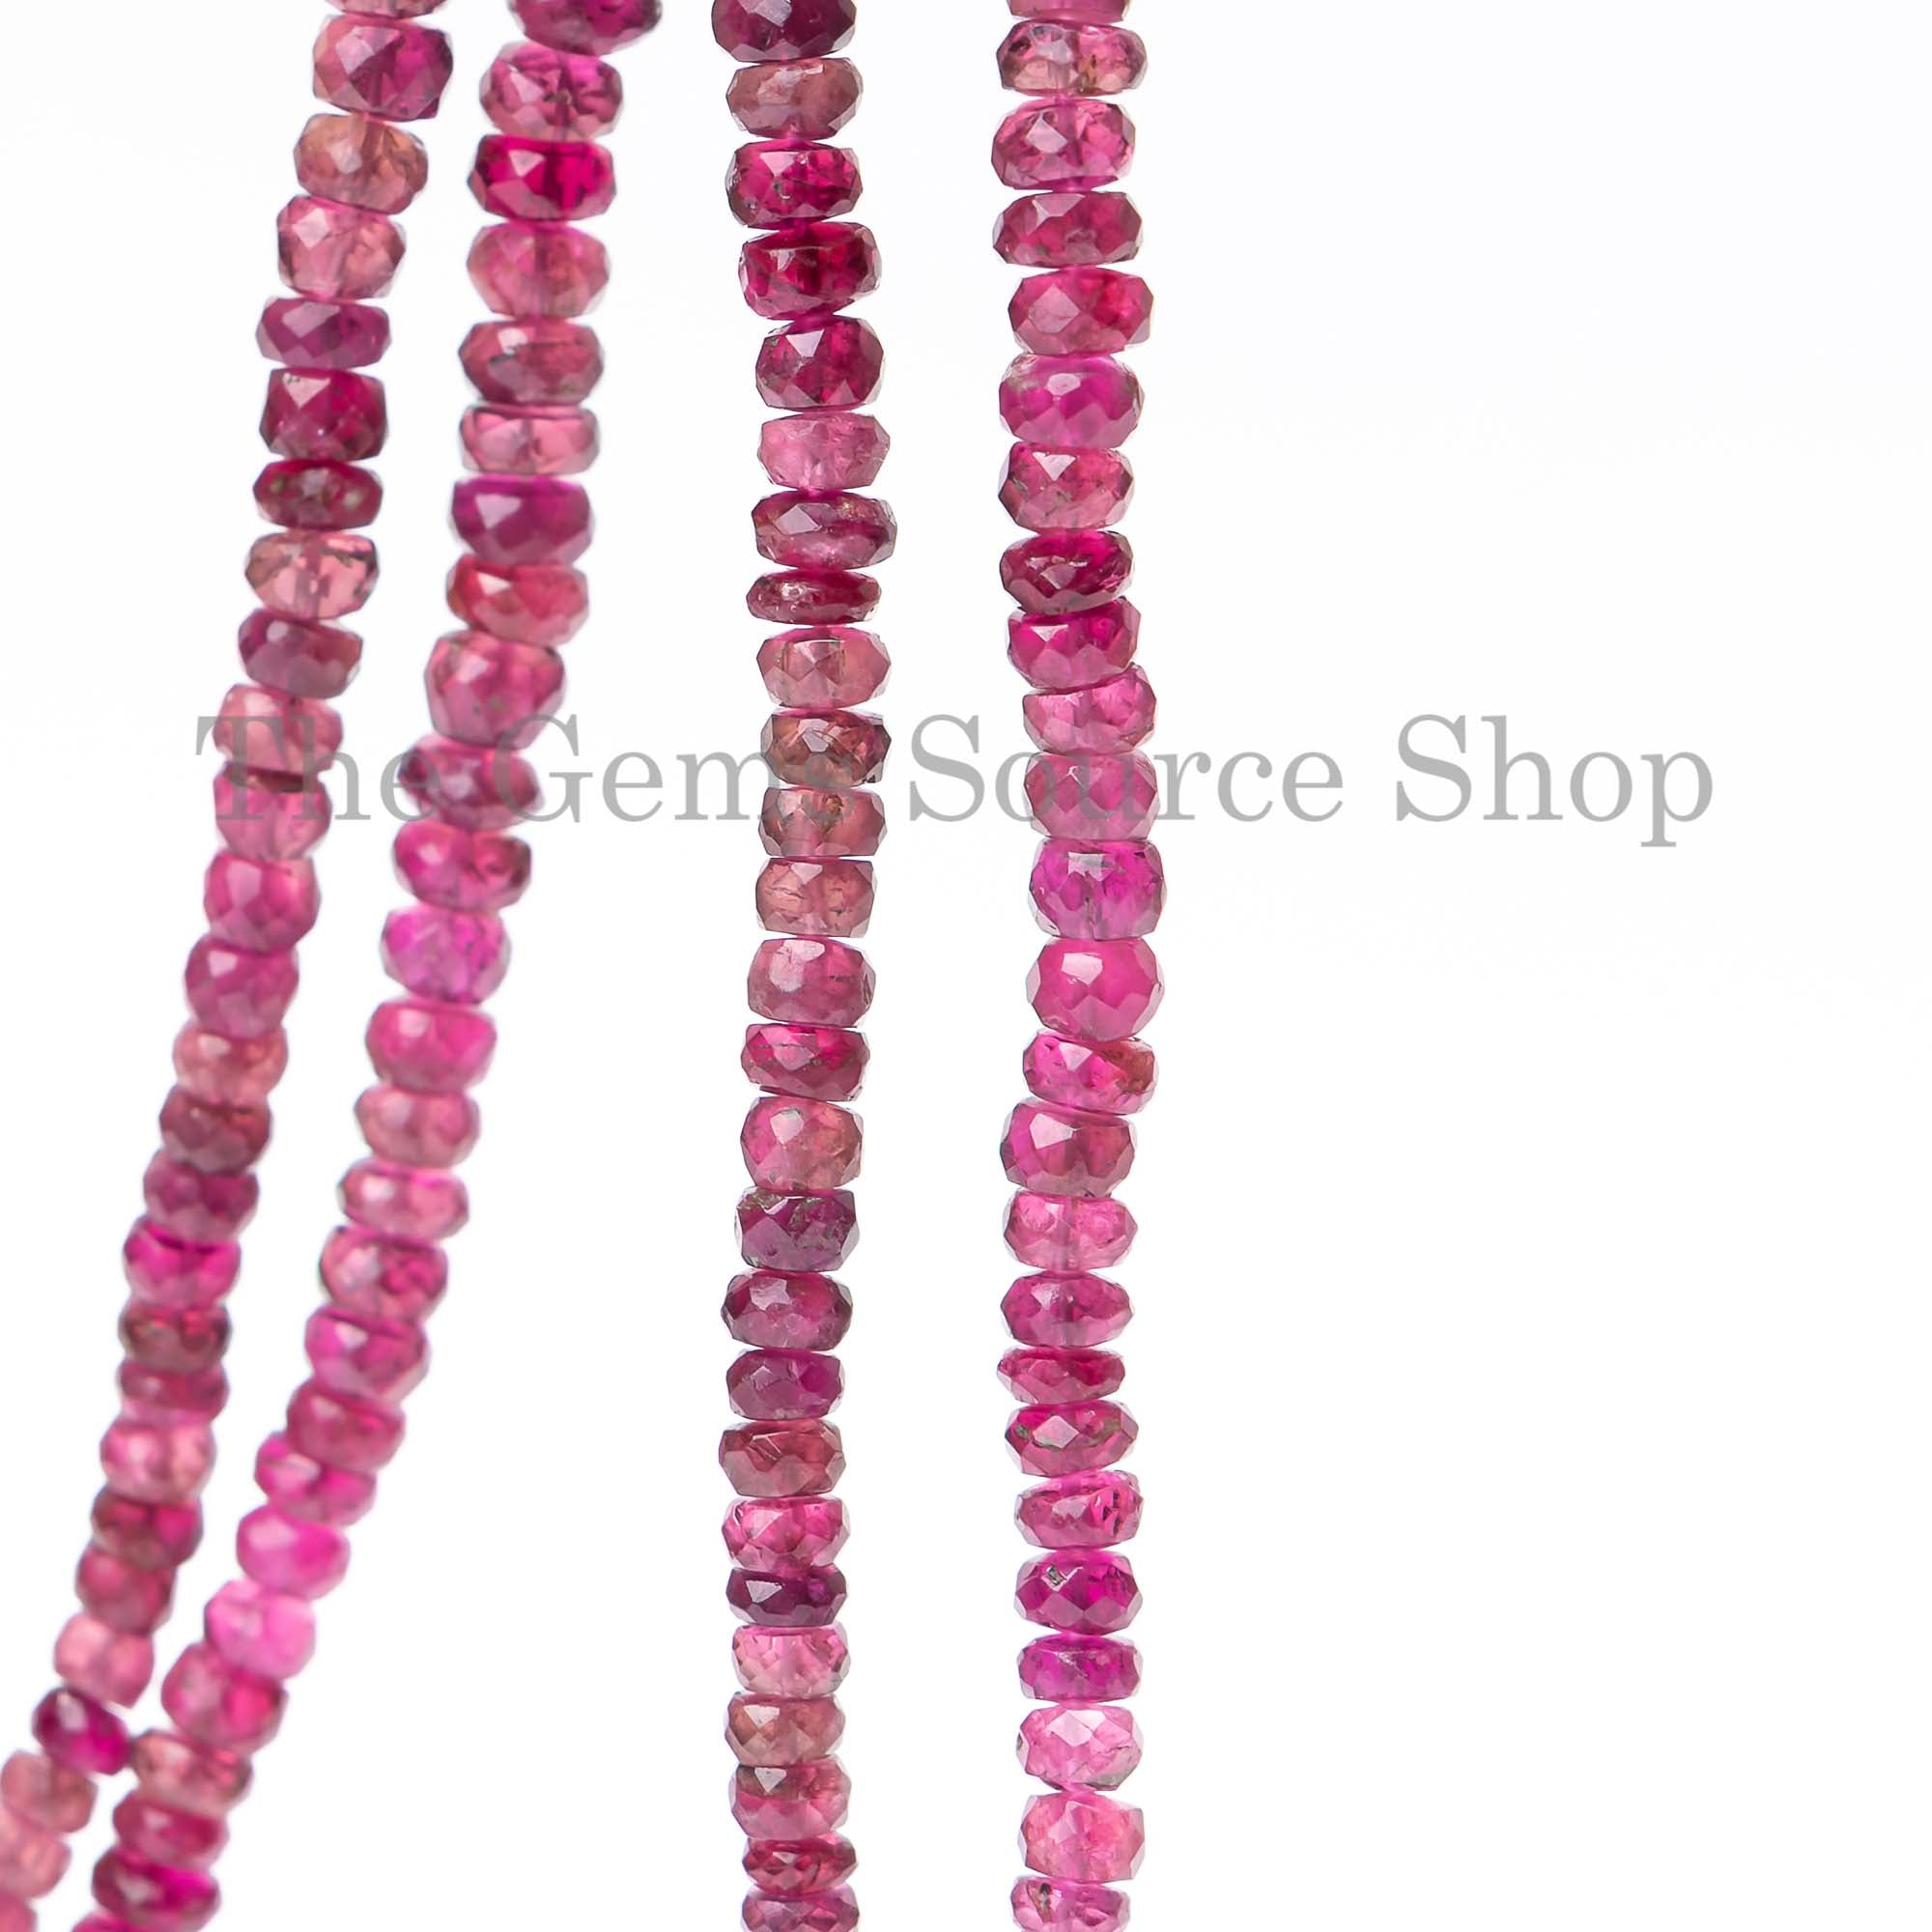 3.5-5mm Rubellite Tourmaline Beads, Tourmaline Faceted Beads, Tourmaline Rondelle Shape Beads